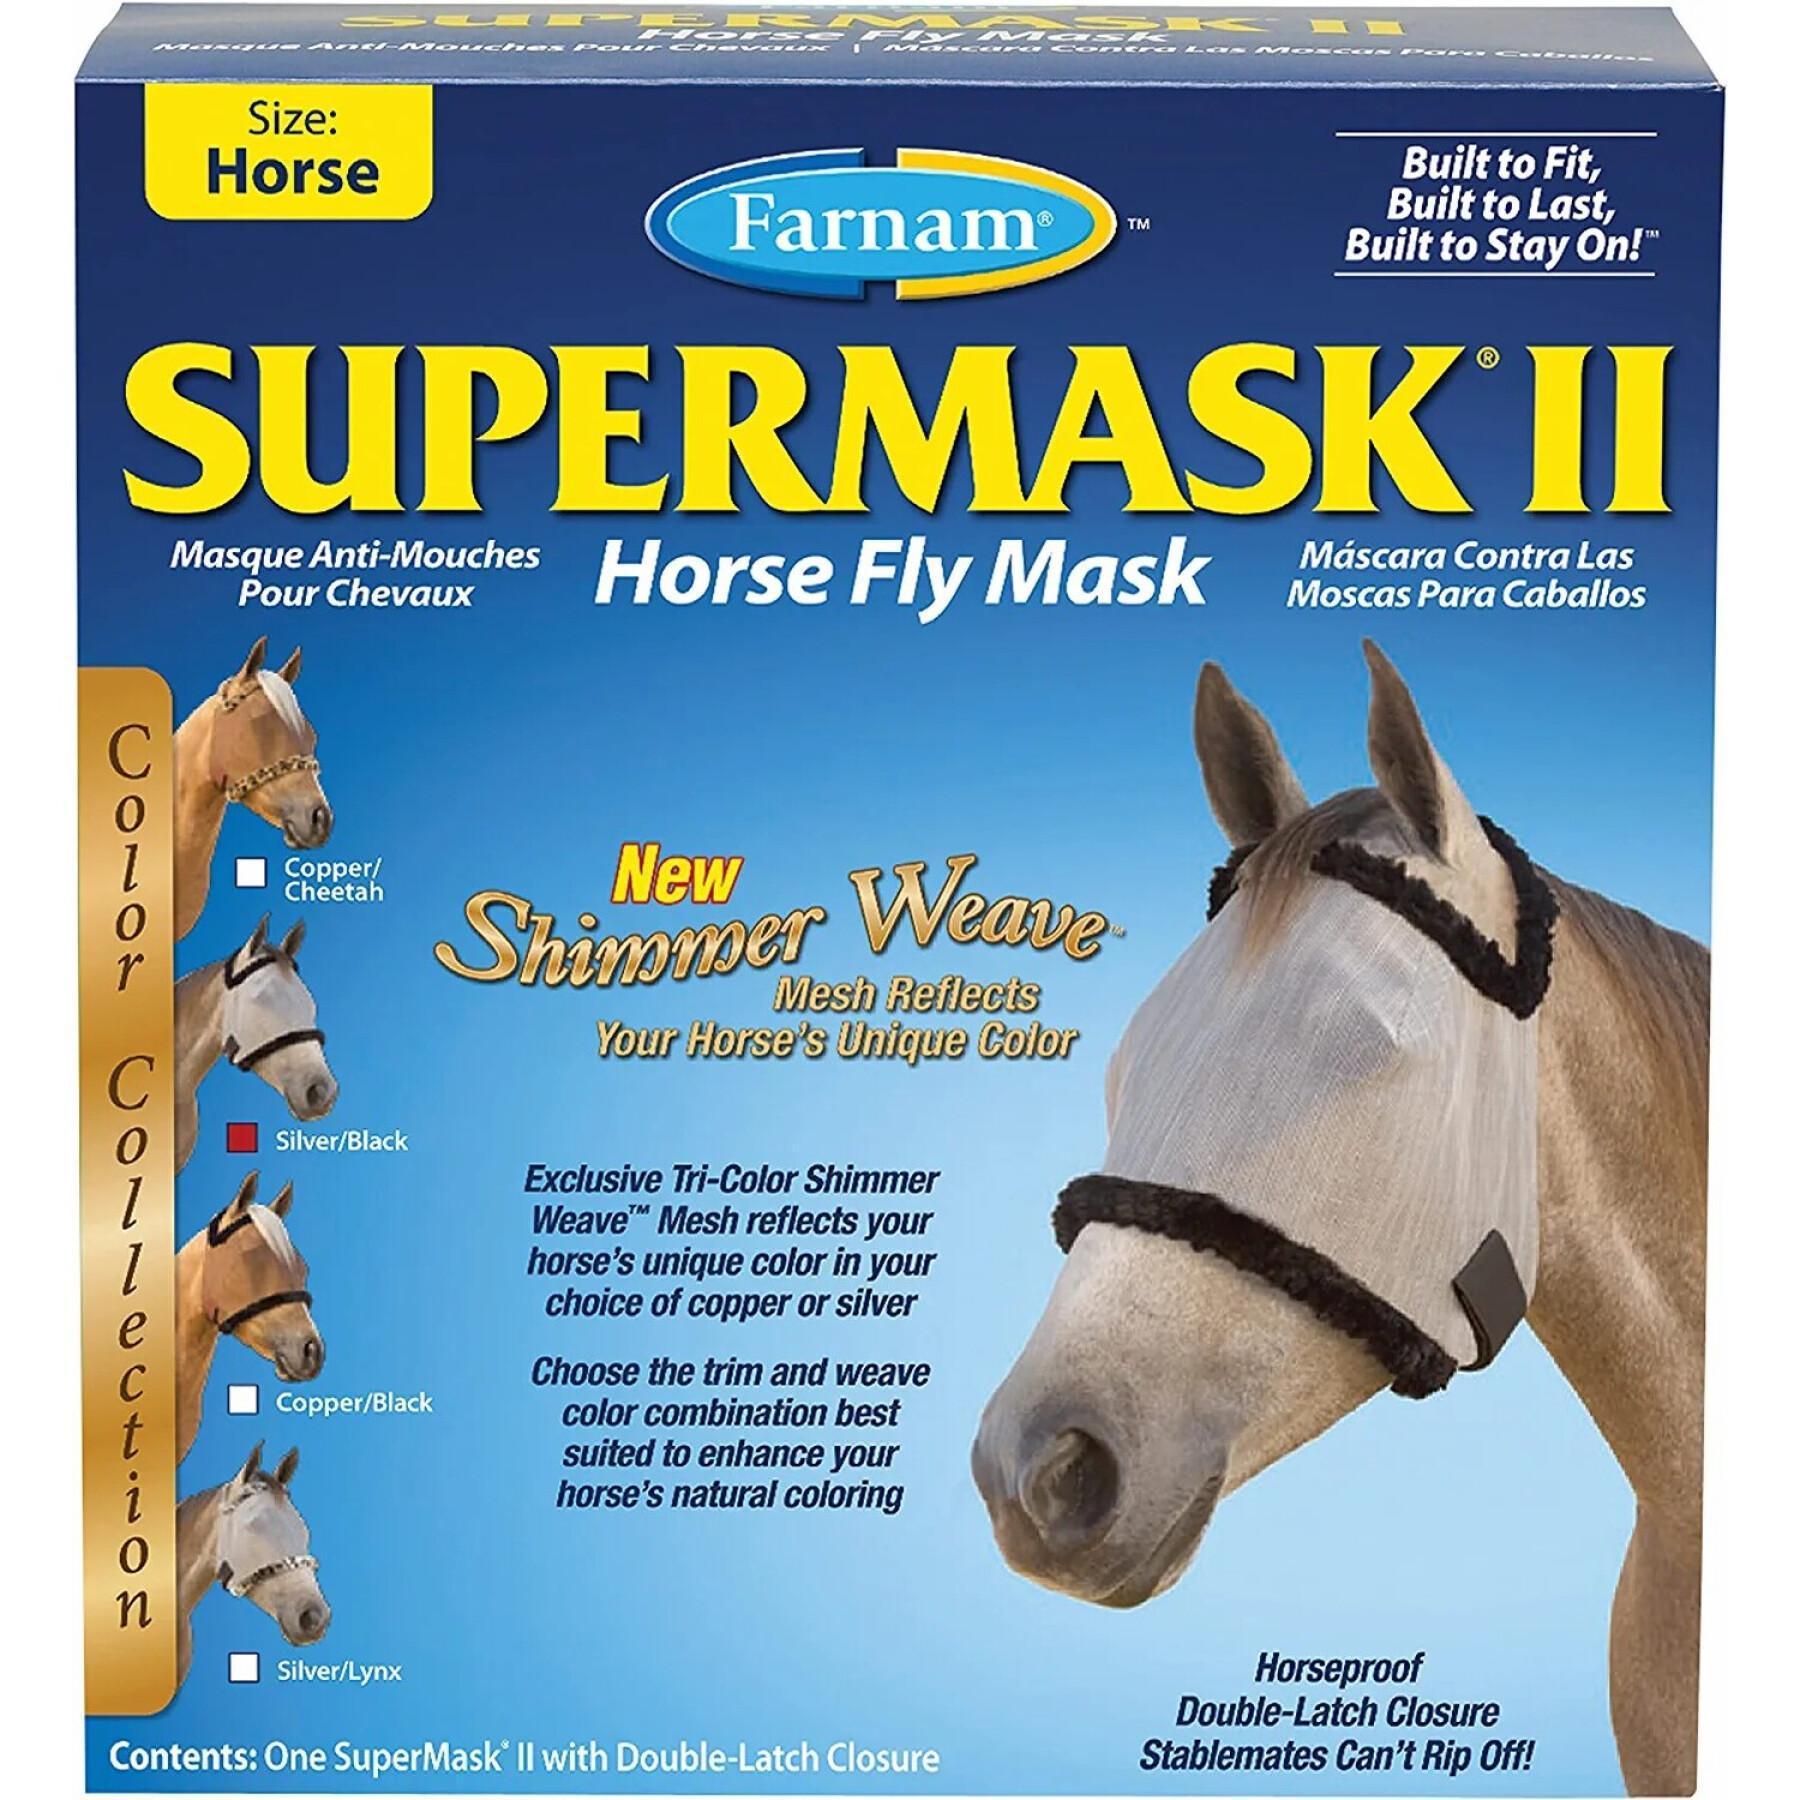 Masque anti-mouches pour cheval sans oreilles Farnam Supermask II Xl XL